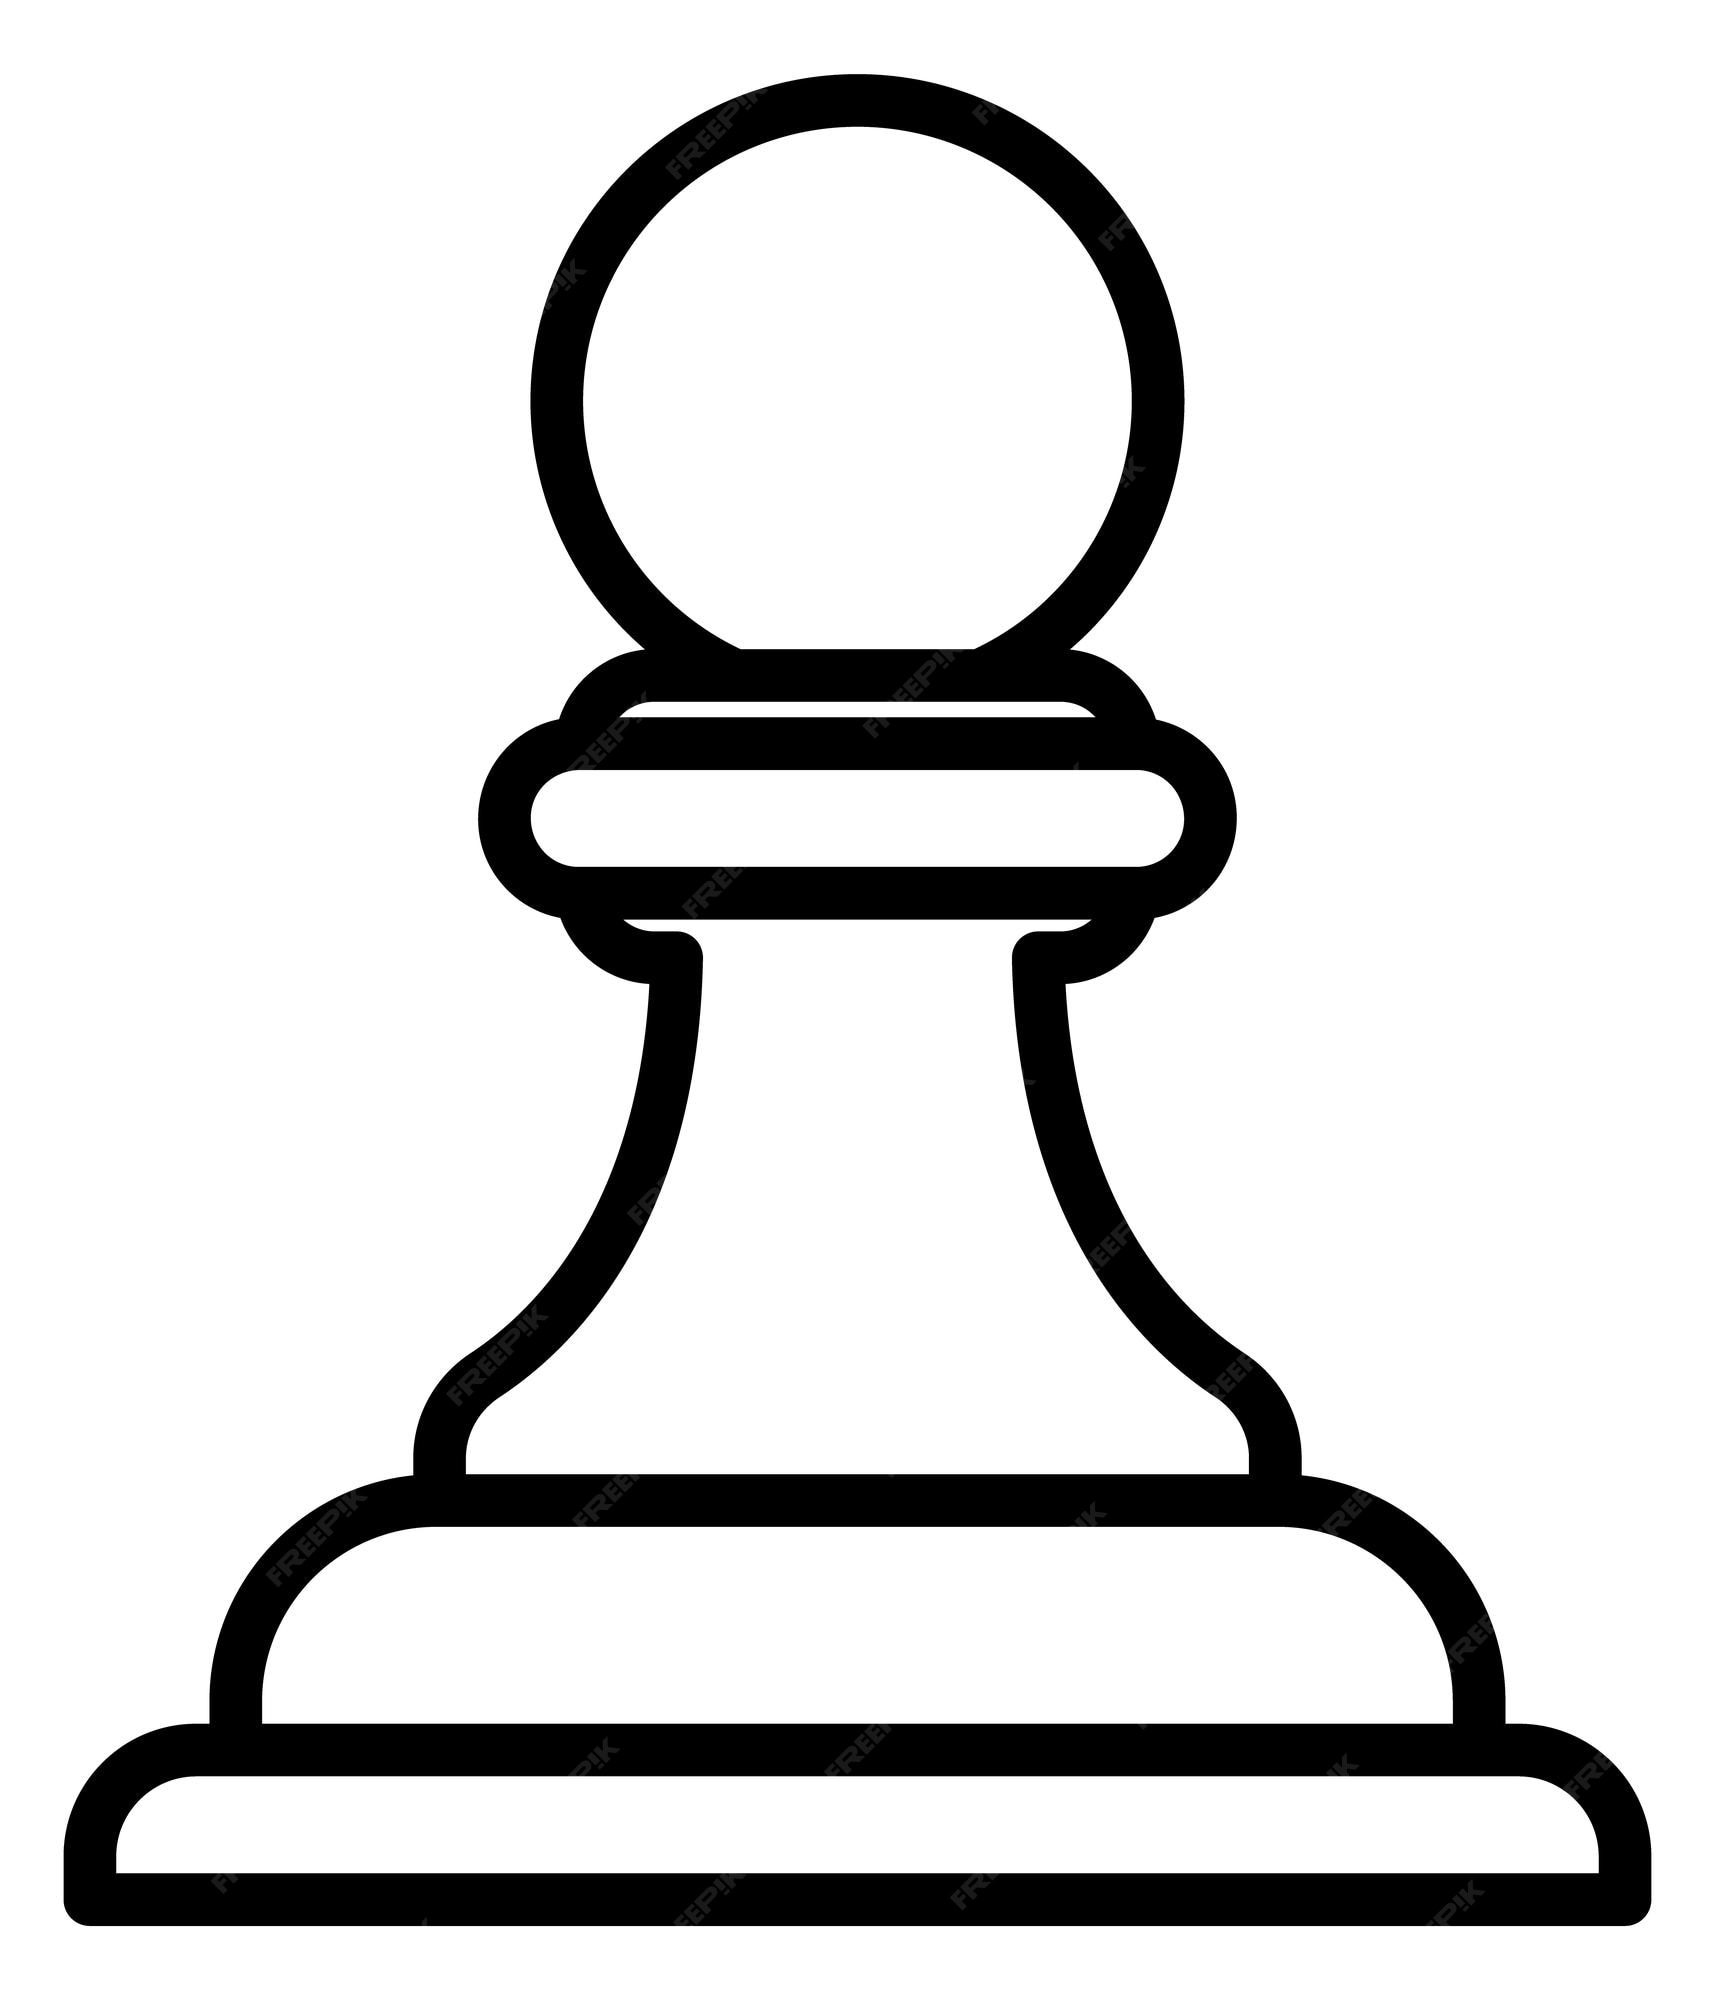 ícone de peão de xadrez, estilo de estrutura de tópicos 14348122 Vetor no  Vecteezy